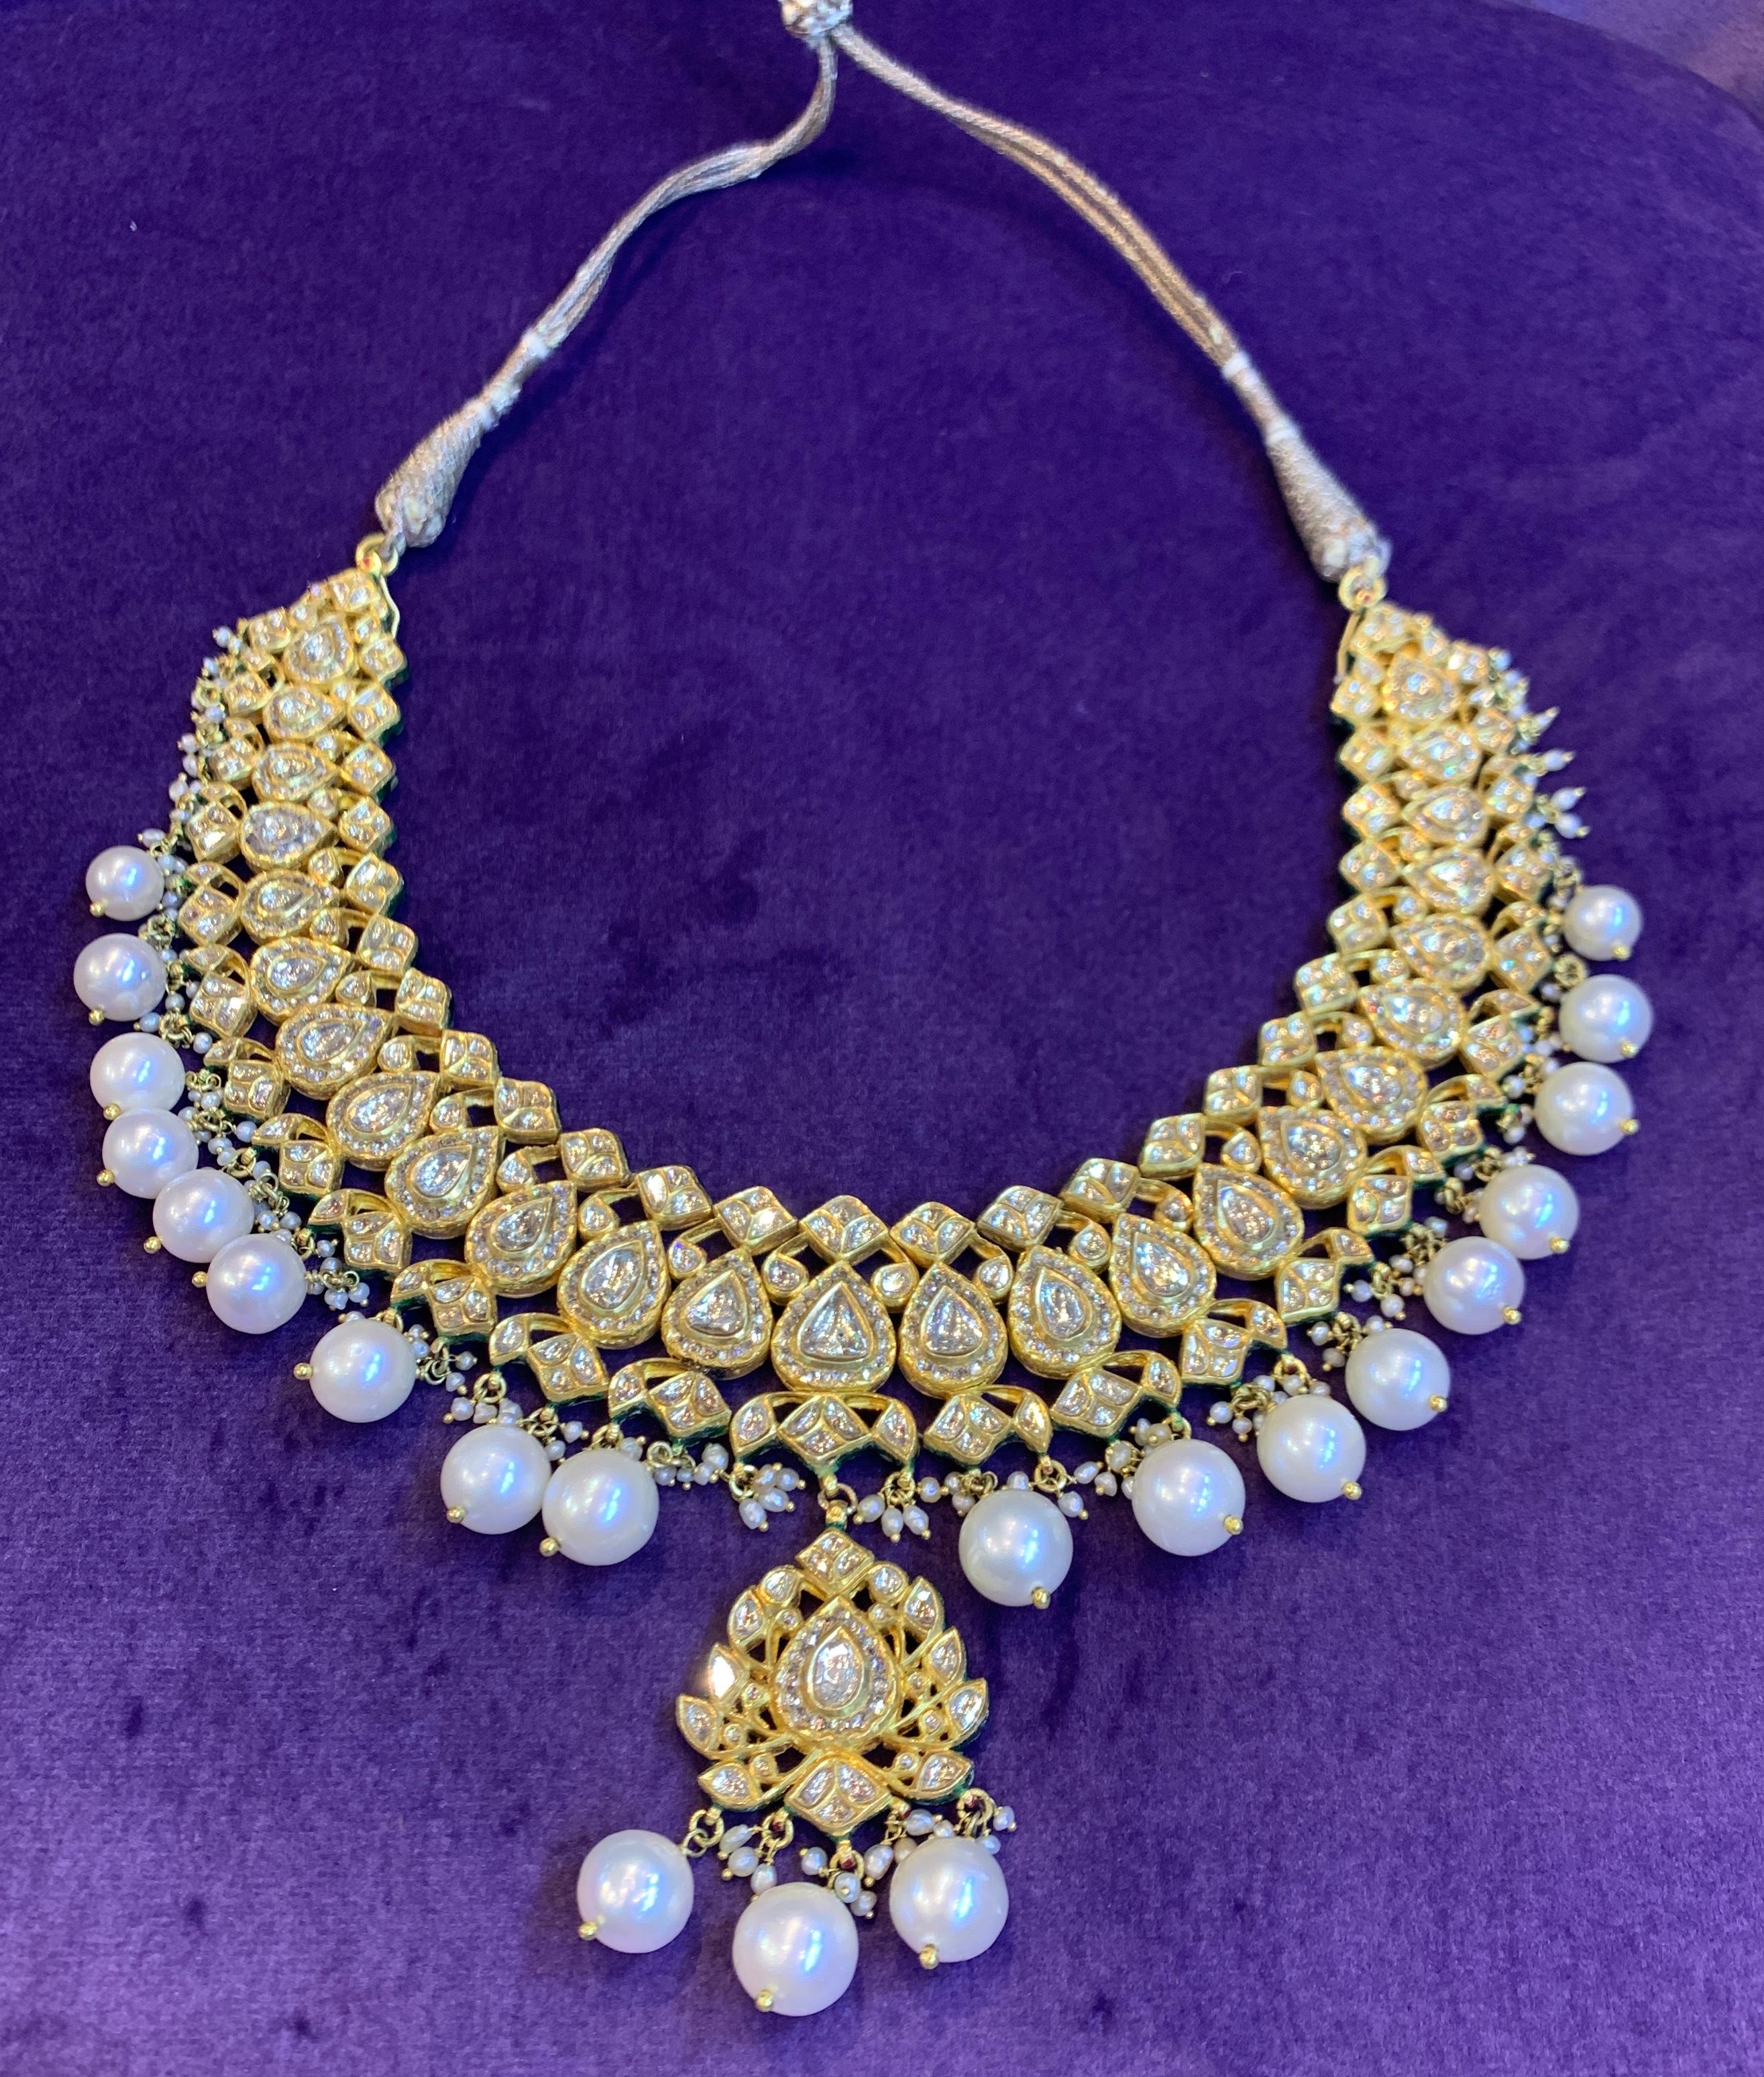 Indian Pearl & Diamond Necklace
Rose Cut Diamonds
Cultured Pearls
Hand 